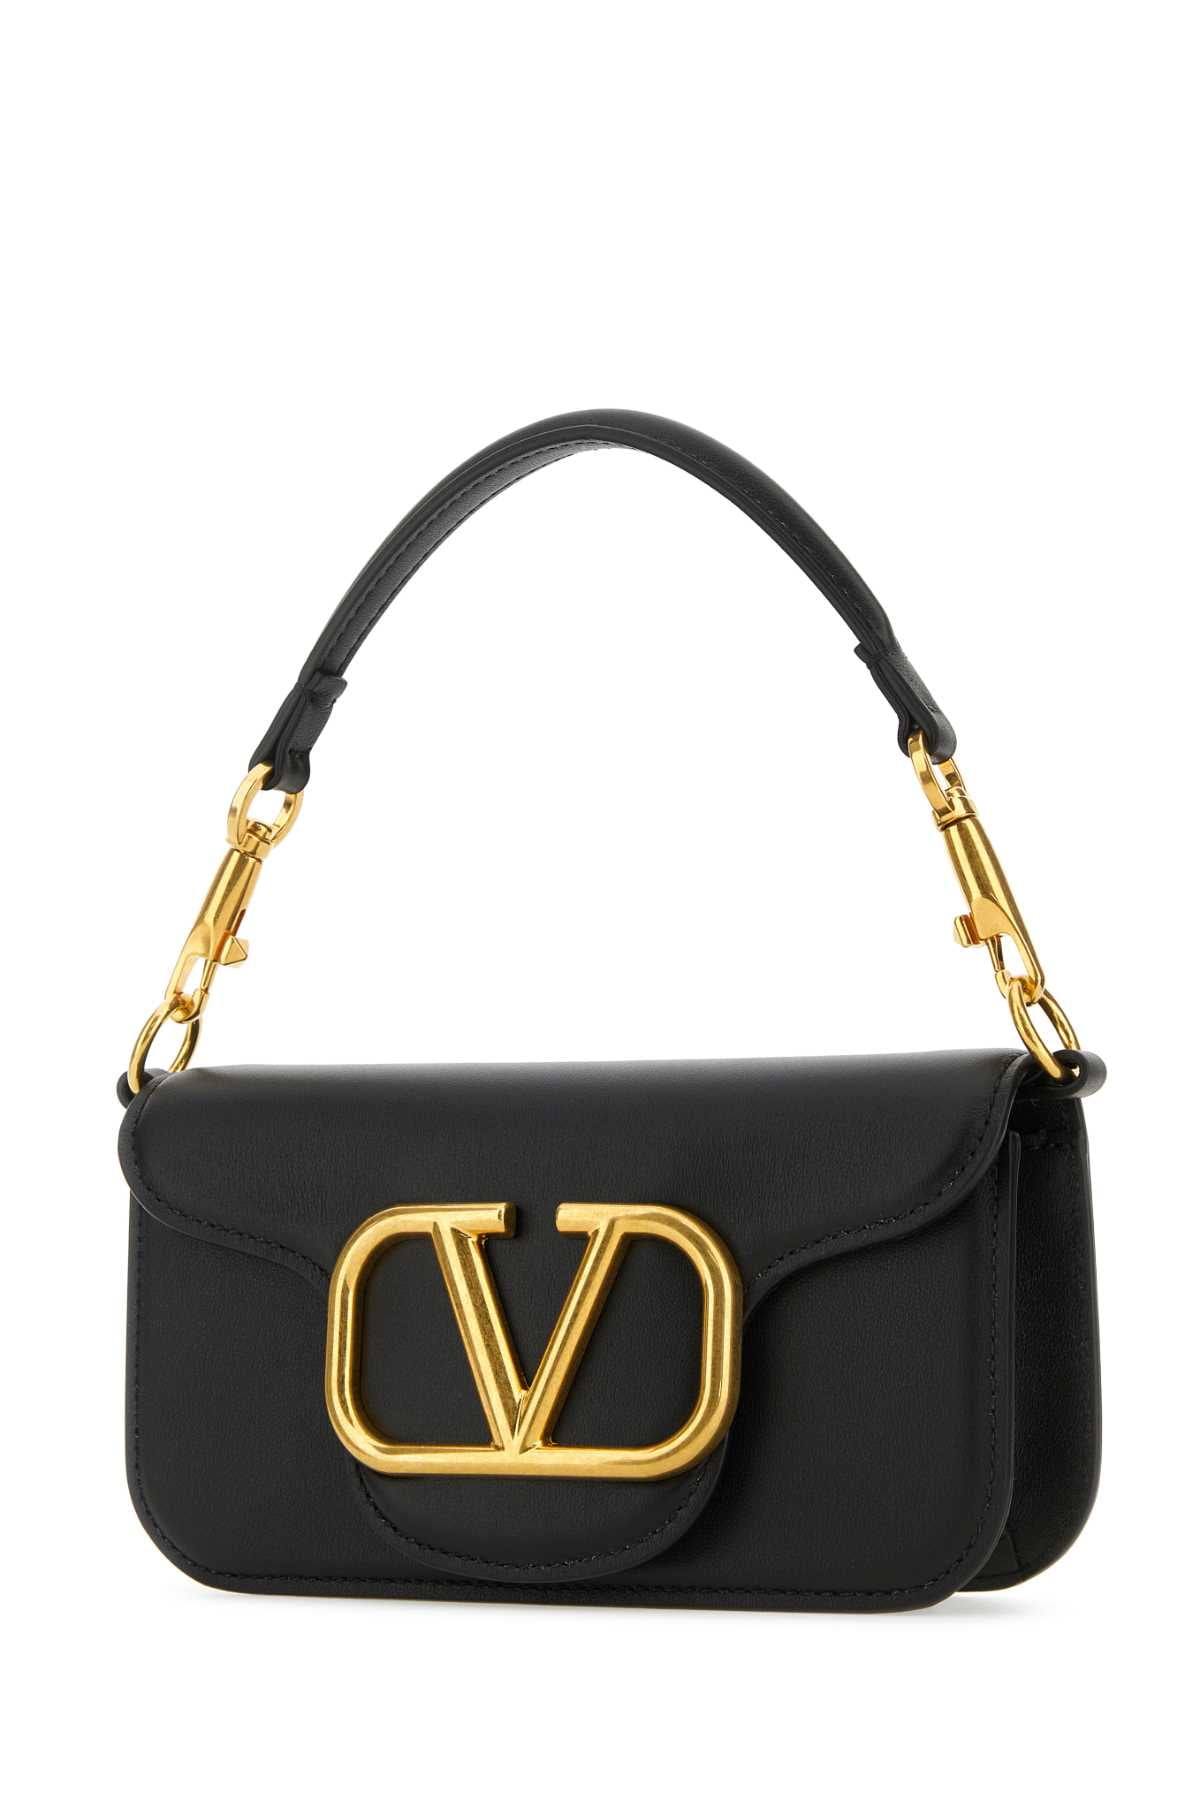 Valentino Garavani Woman Black Leather Small Locã² Handbag 